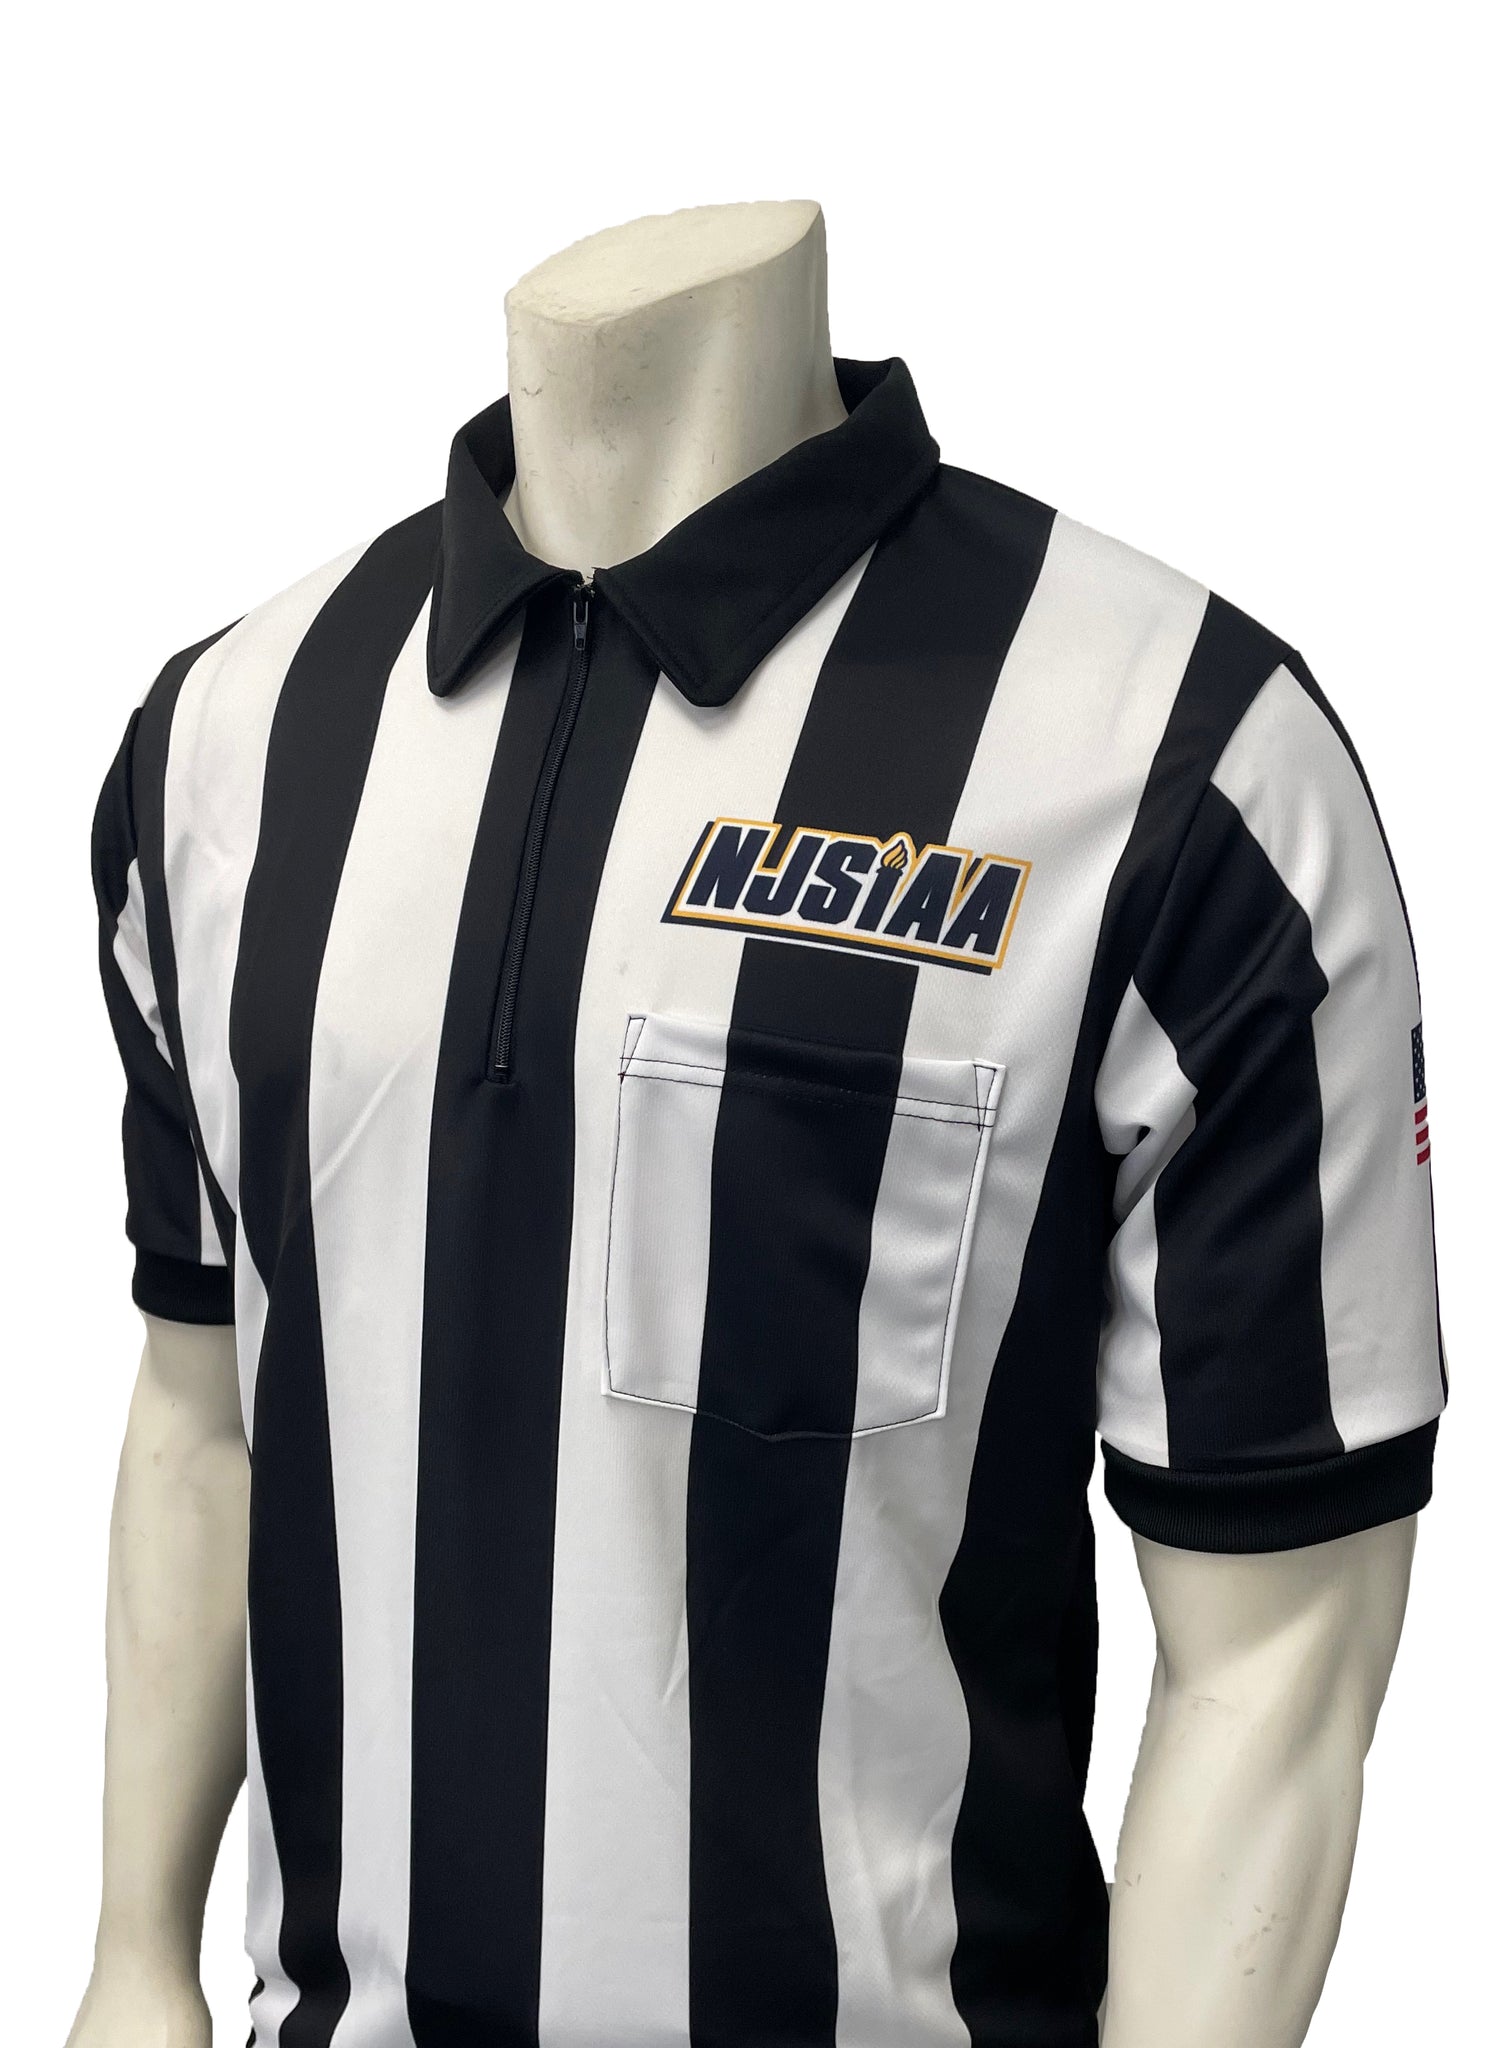 USA137NJ - Smitty "Made in USA" - NJSIAA Men's Football and Lacrosse Short Sleeve Shirt